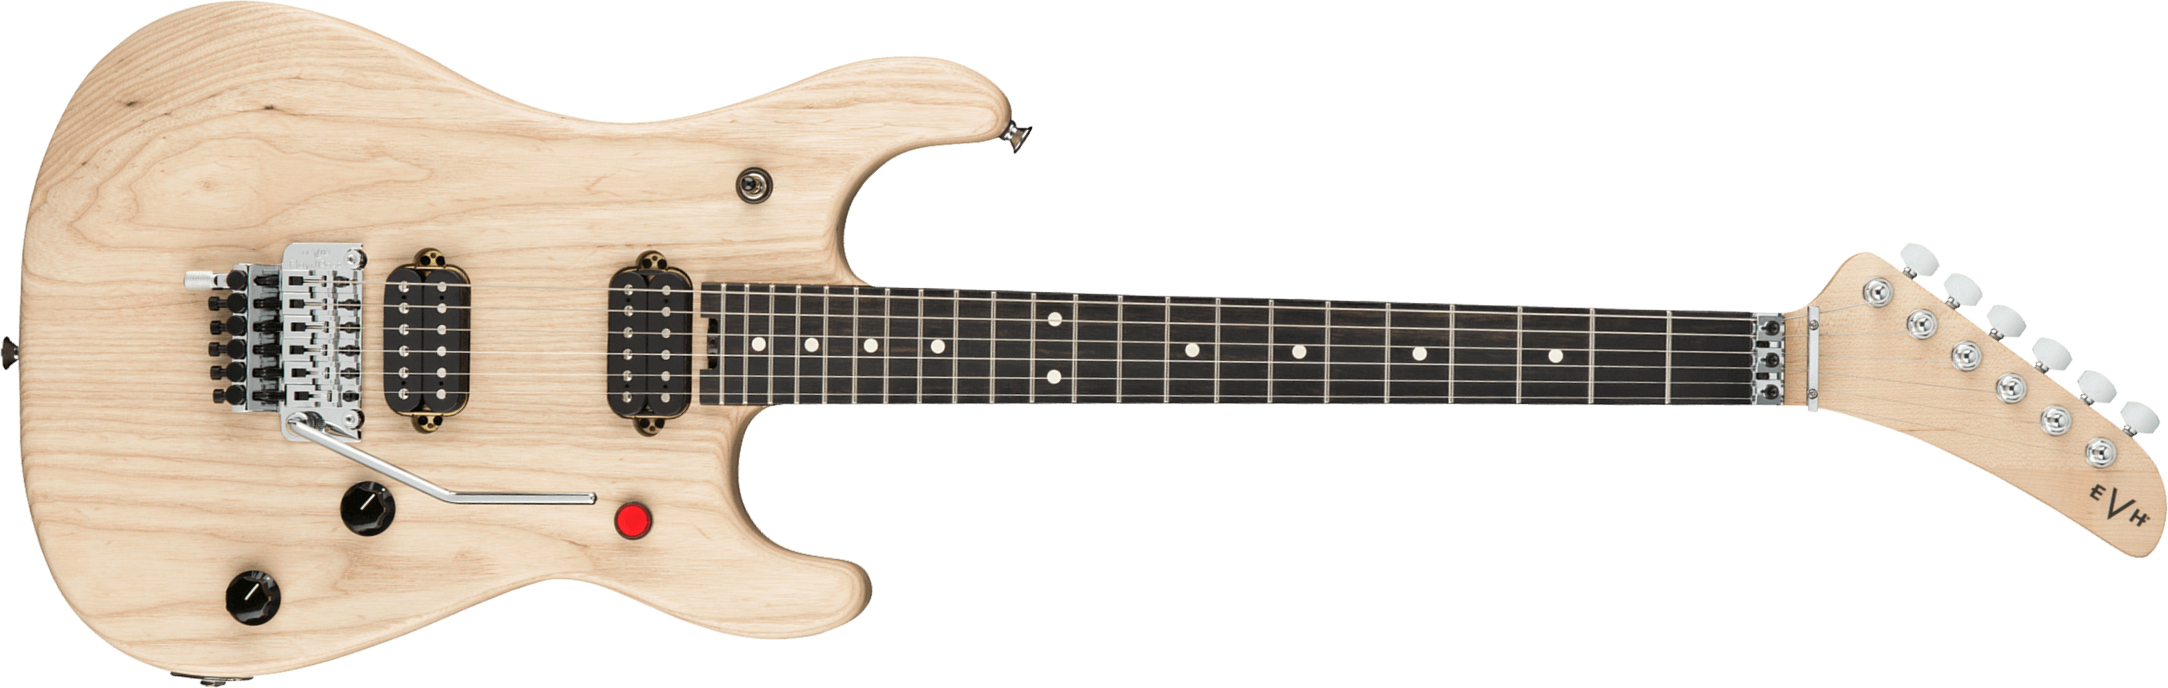 Evh 5150 Deluxe Ash Ltd Mex 2h Fr Eb - Natural Satin - Str shape electric guitar - Main picture